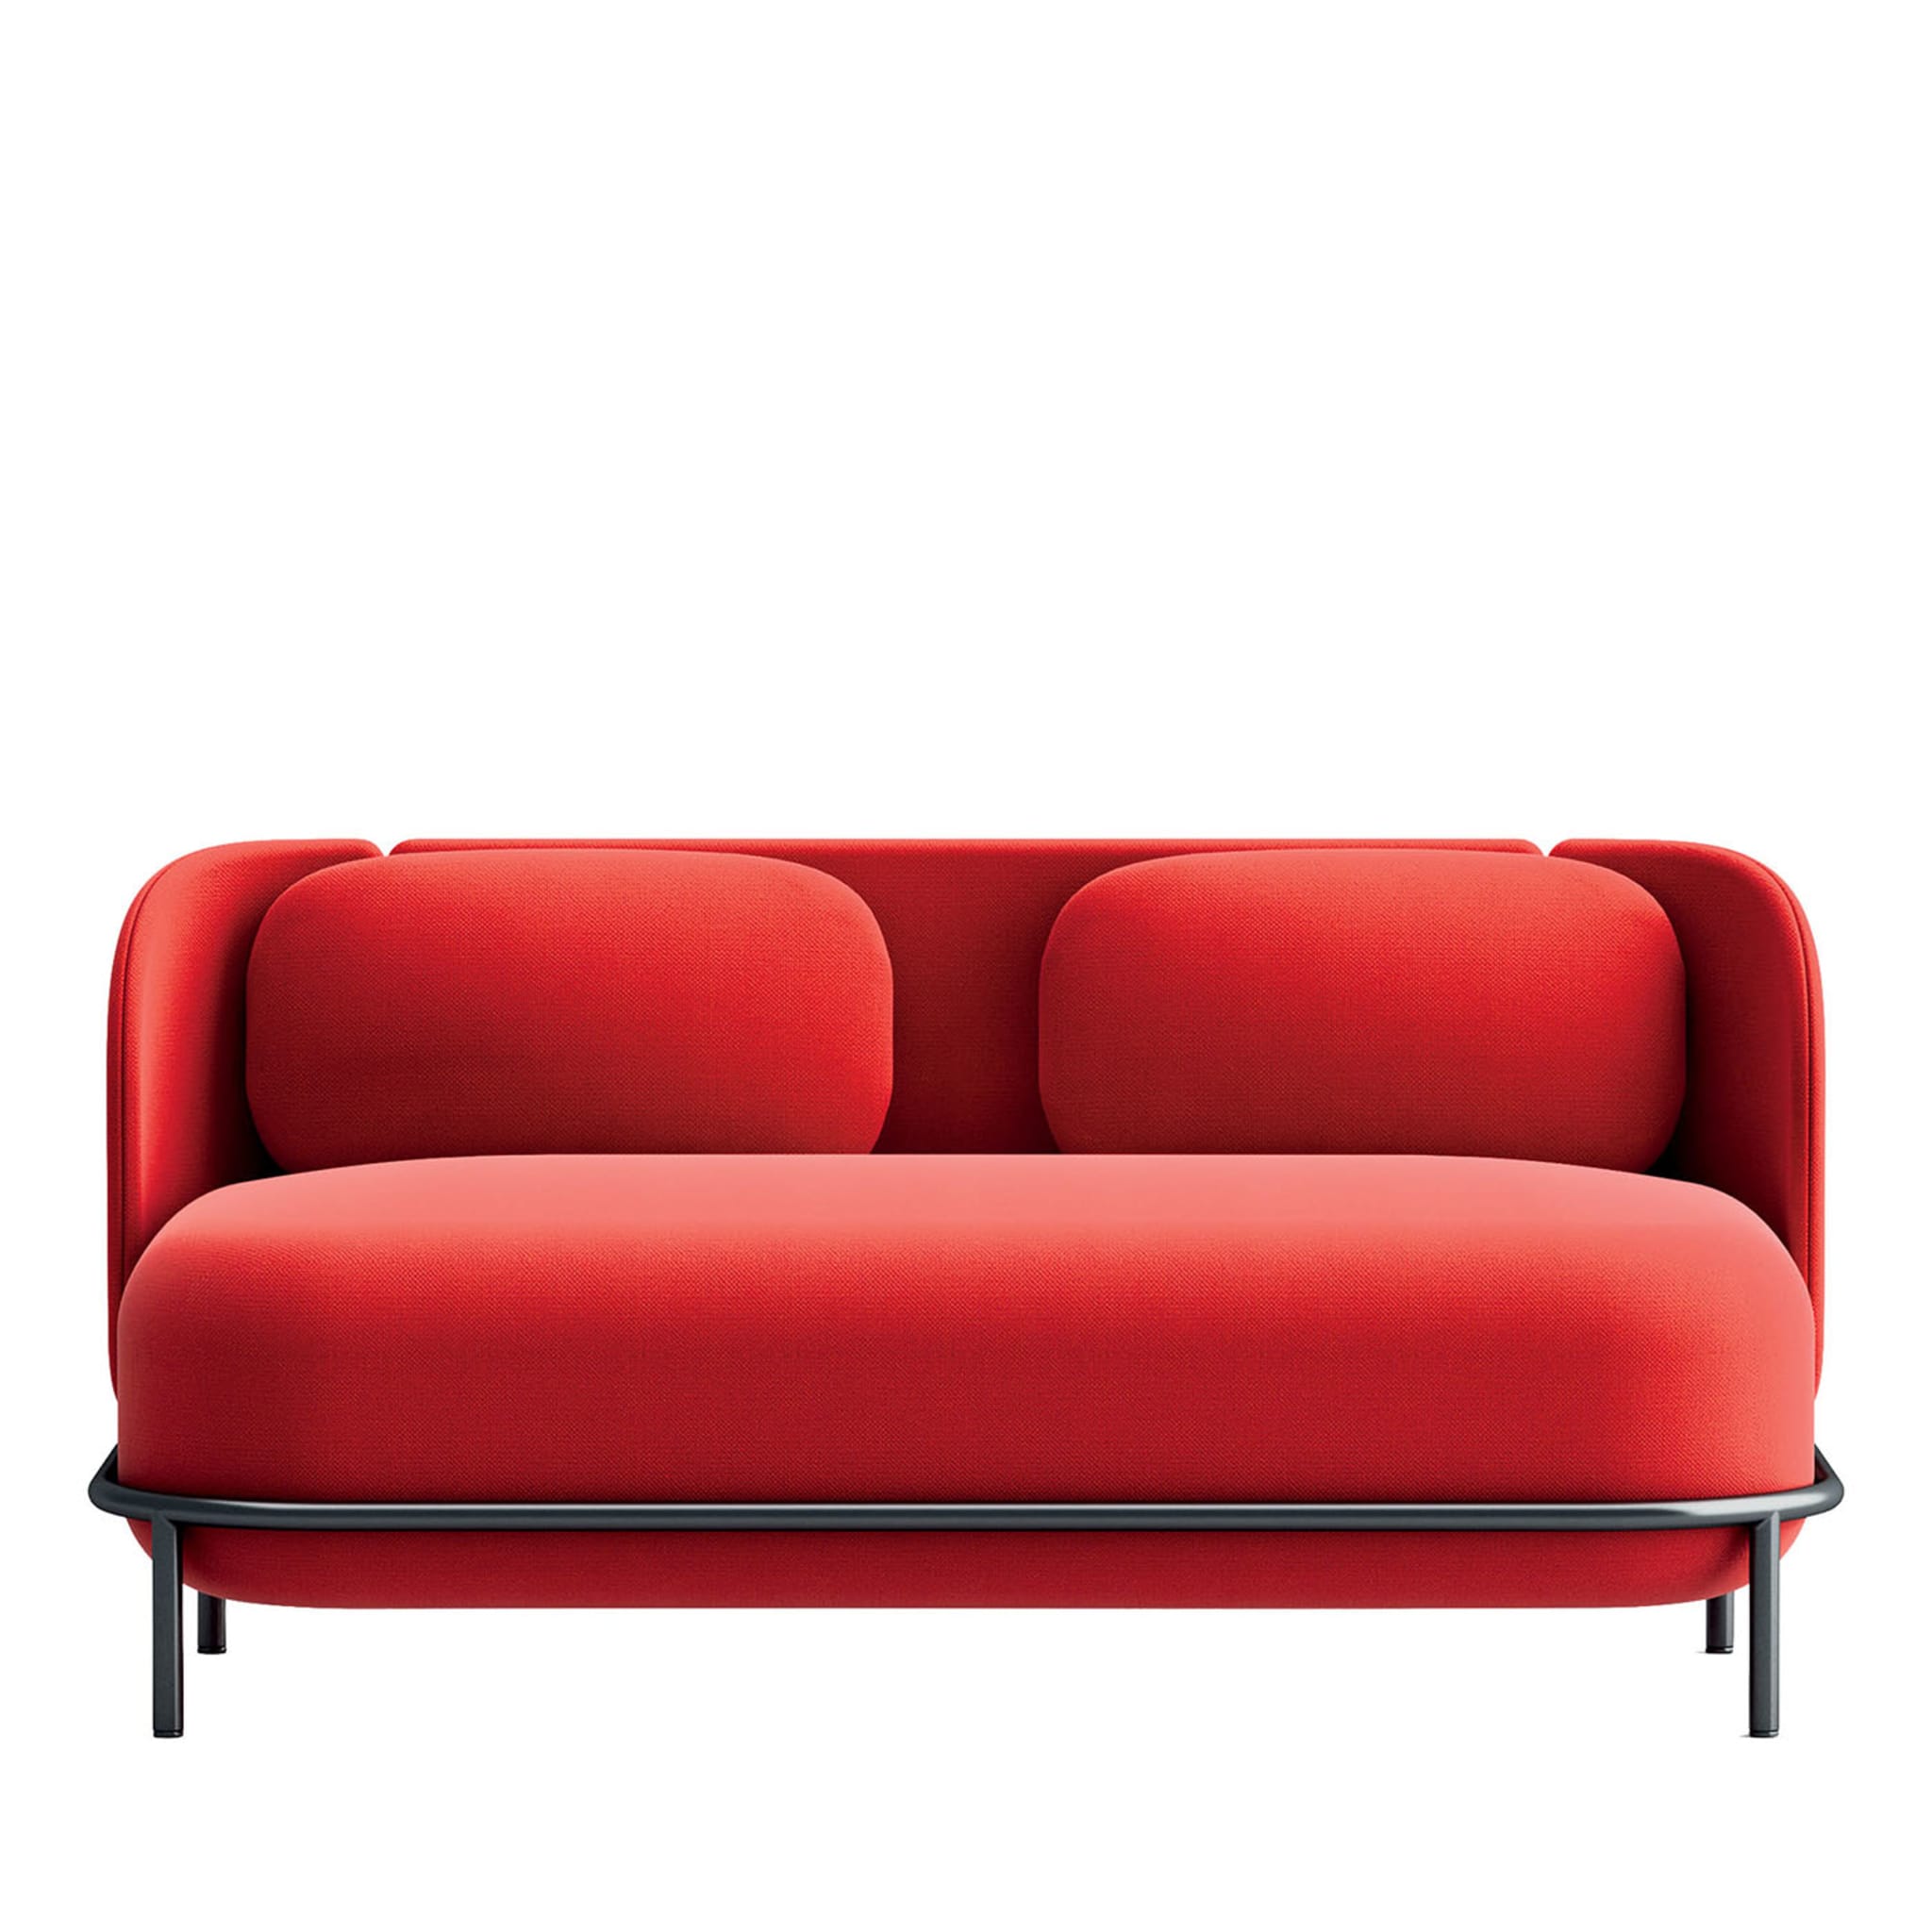 Bold Red Sofa by Studio Pastina - Main view